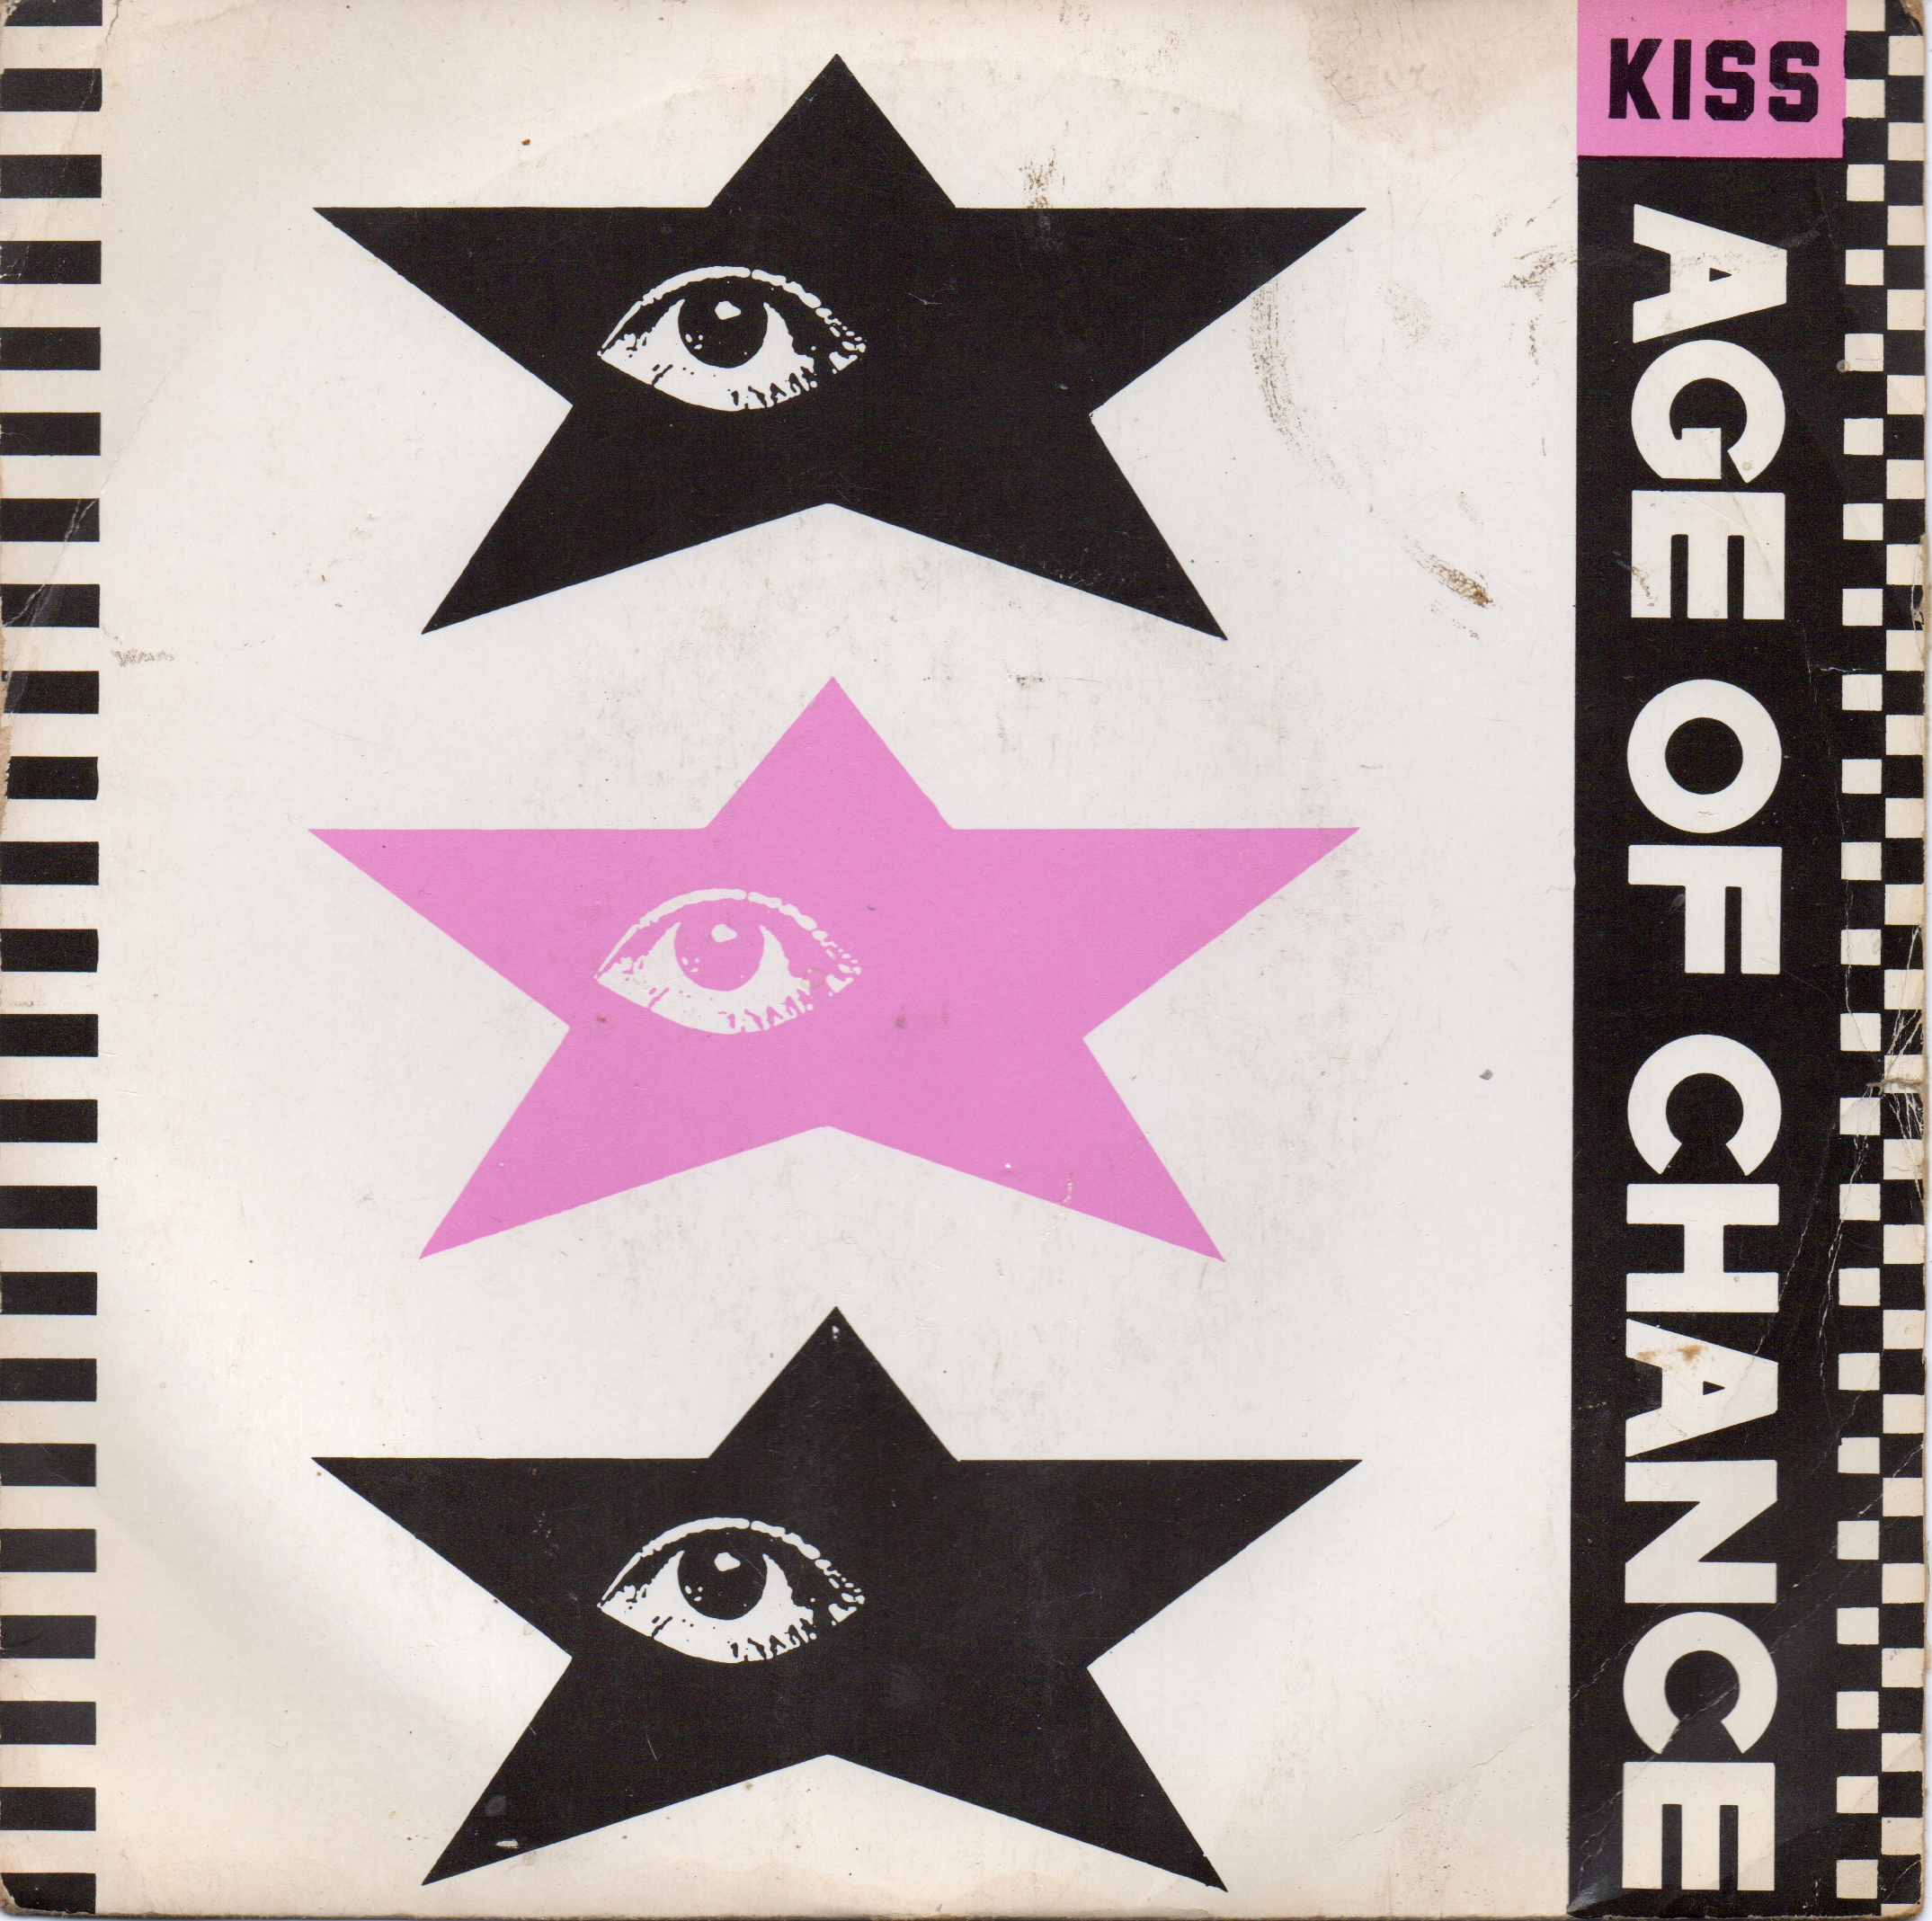 KISS cover art